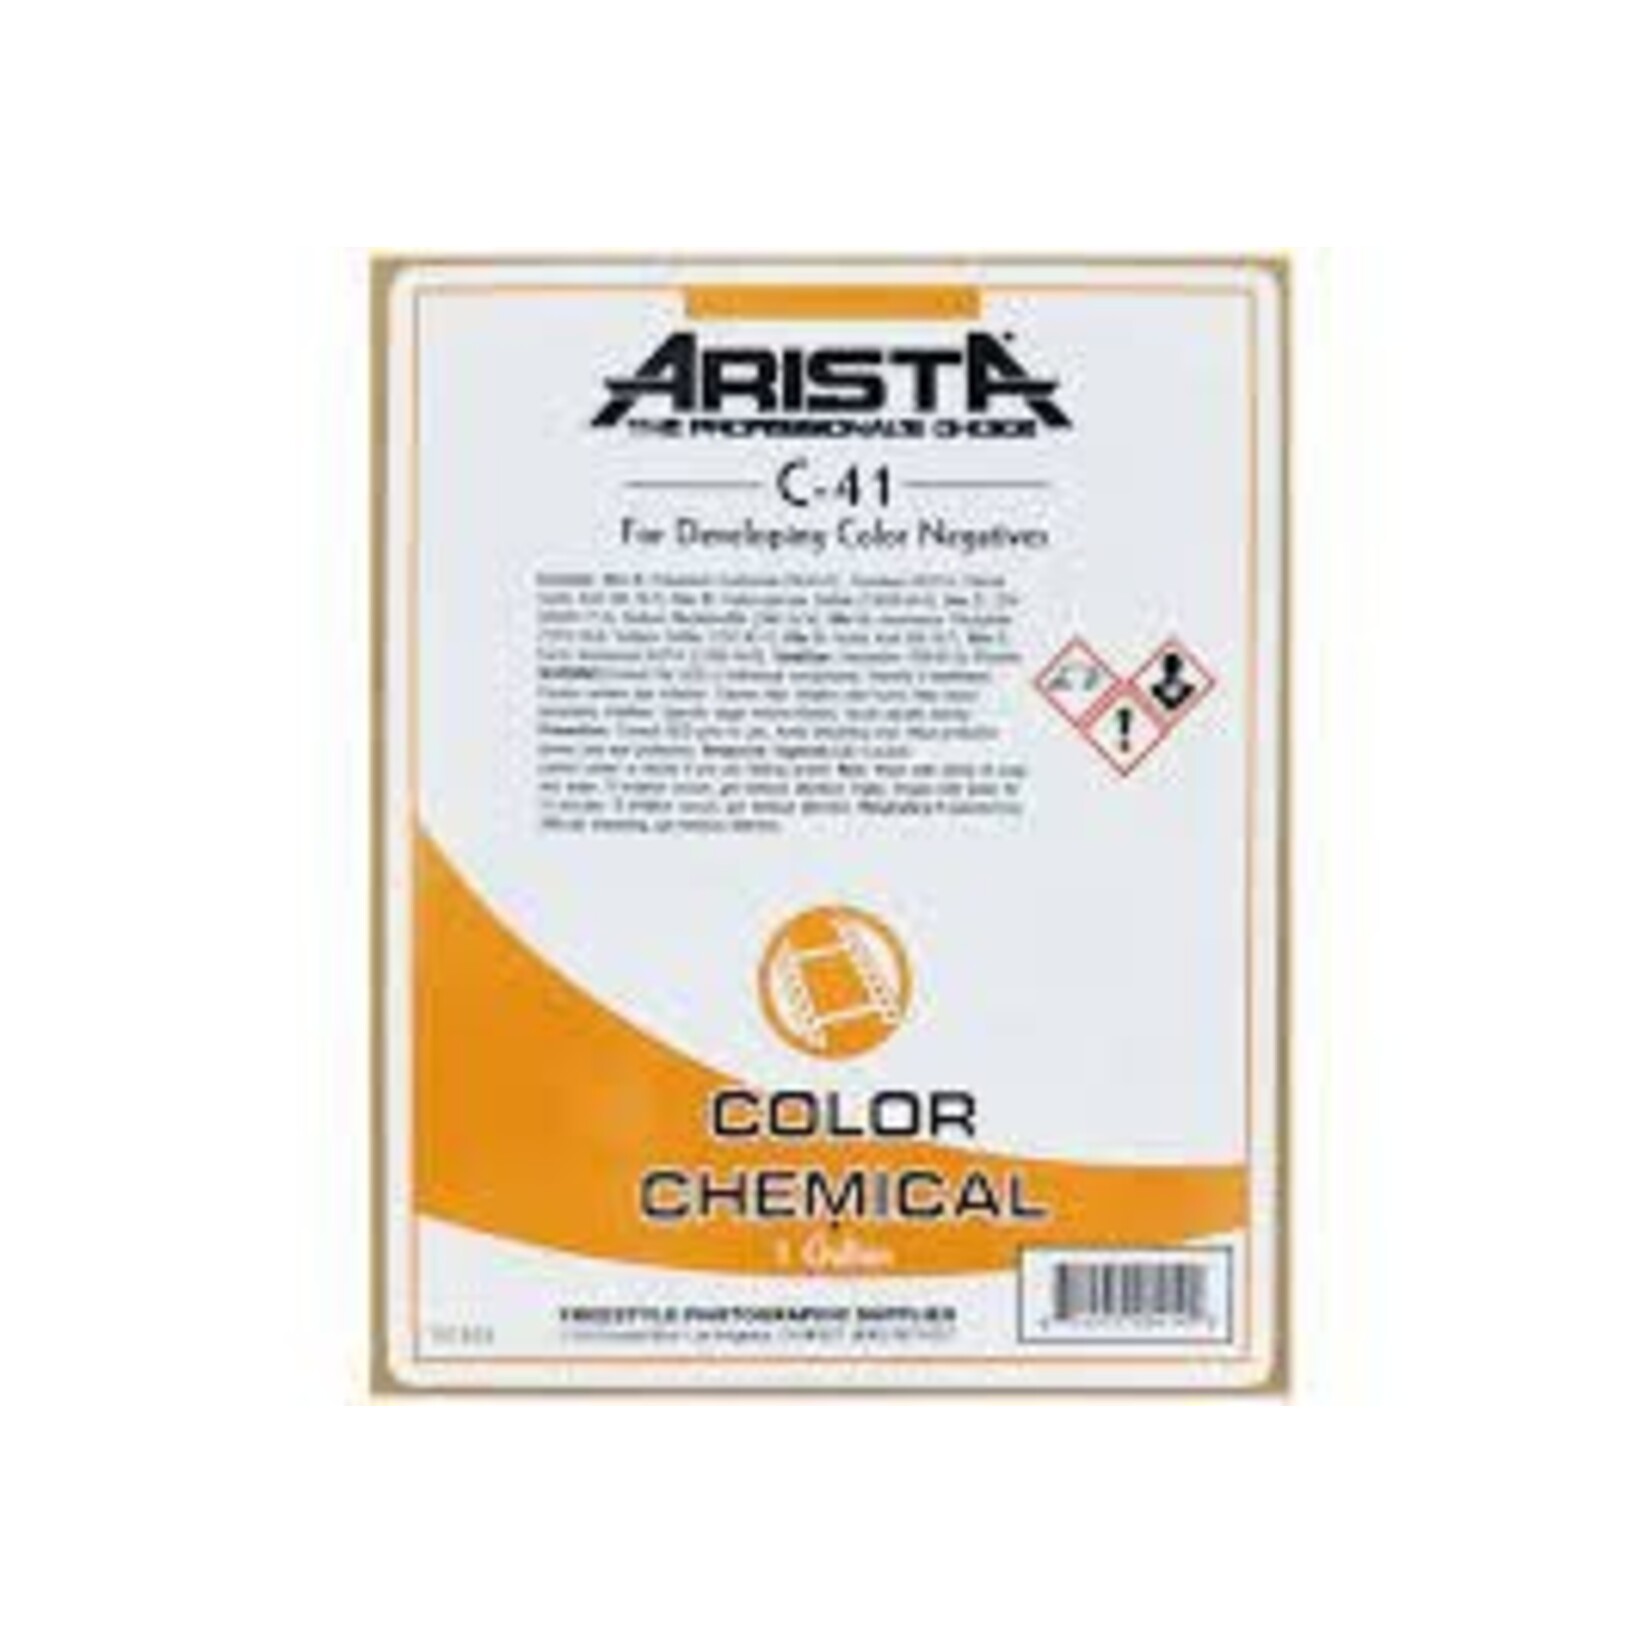 Arista Arista C-41 Color Developing Kit - Gallon